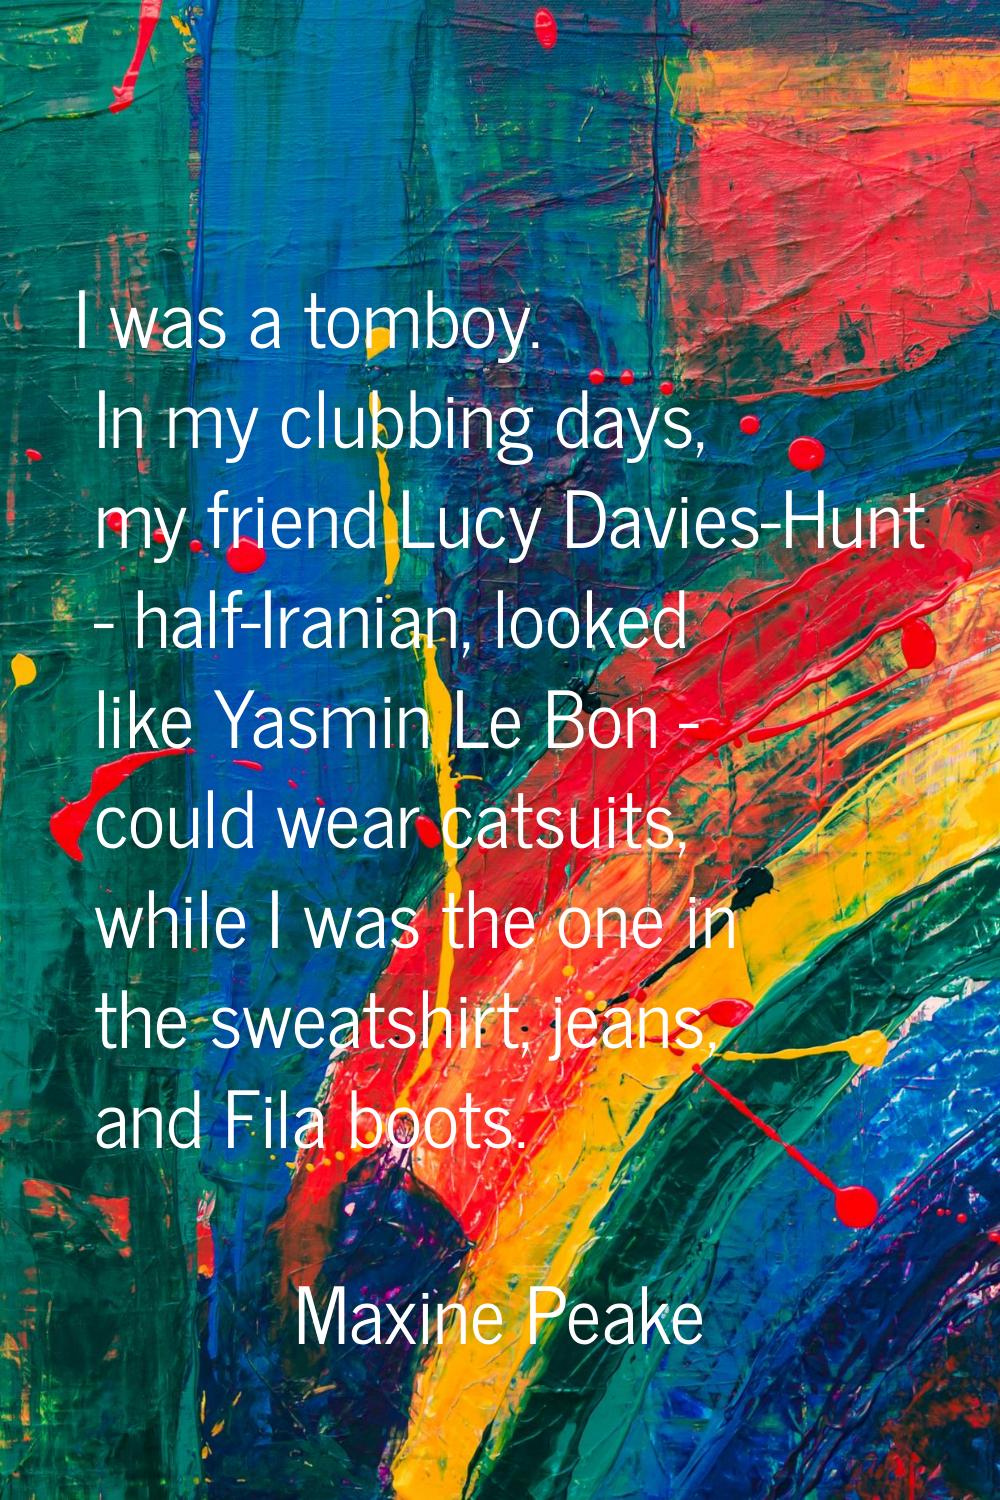 I was a tomboy. In my clubbing days, my friend Lucy Davies-Hunt - half-Iranian, looked like Yasmin 